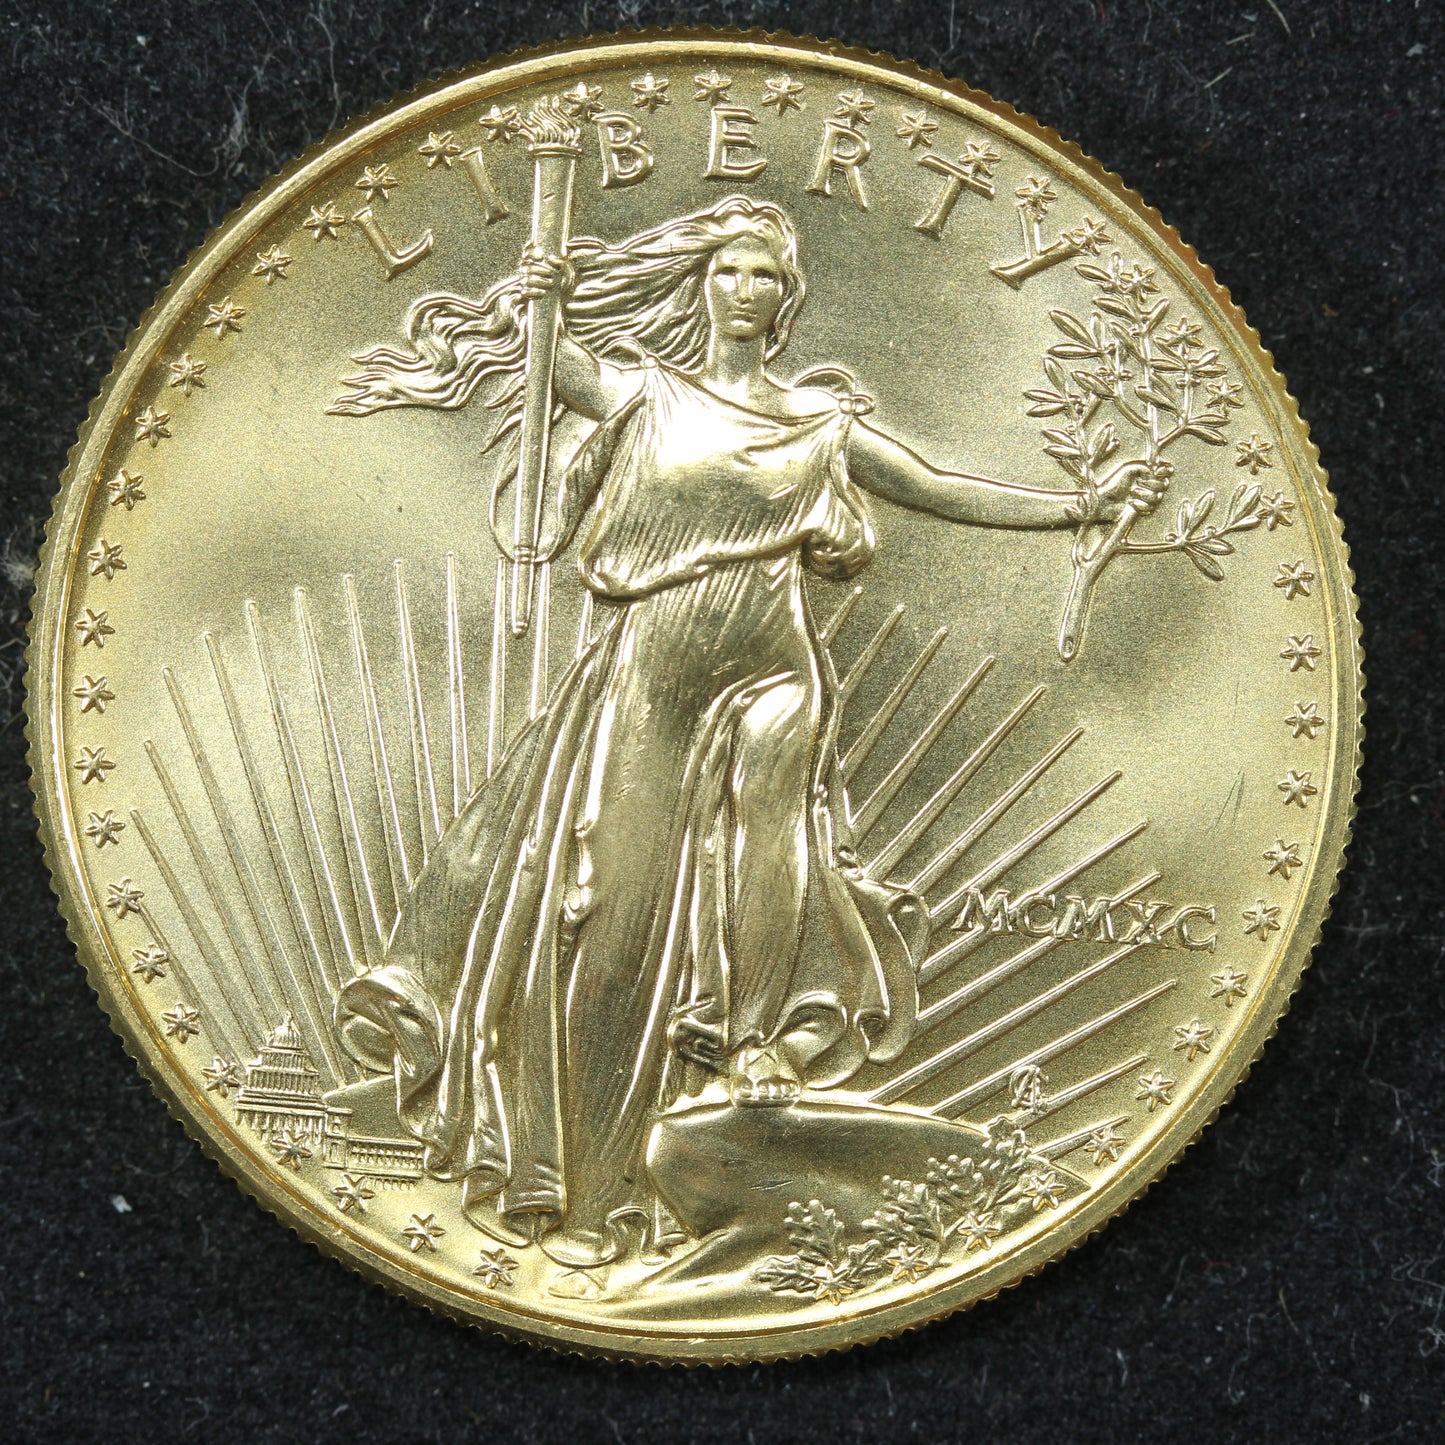 1990 $50 1 oz Gold American Eagle - BU Great Condition